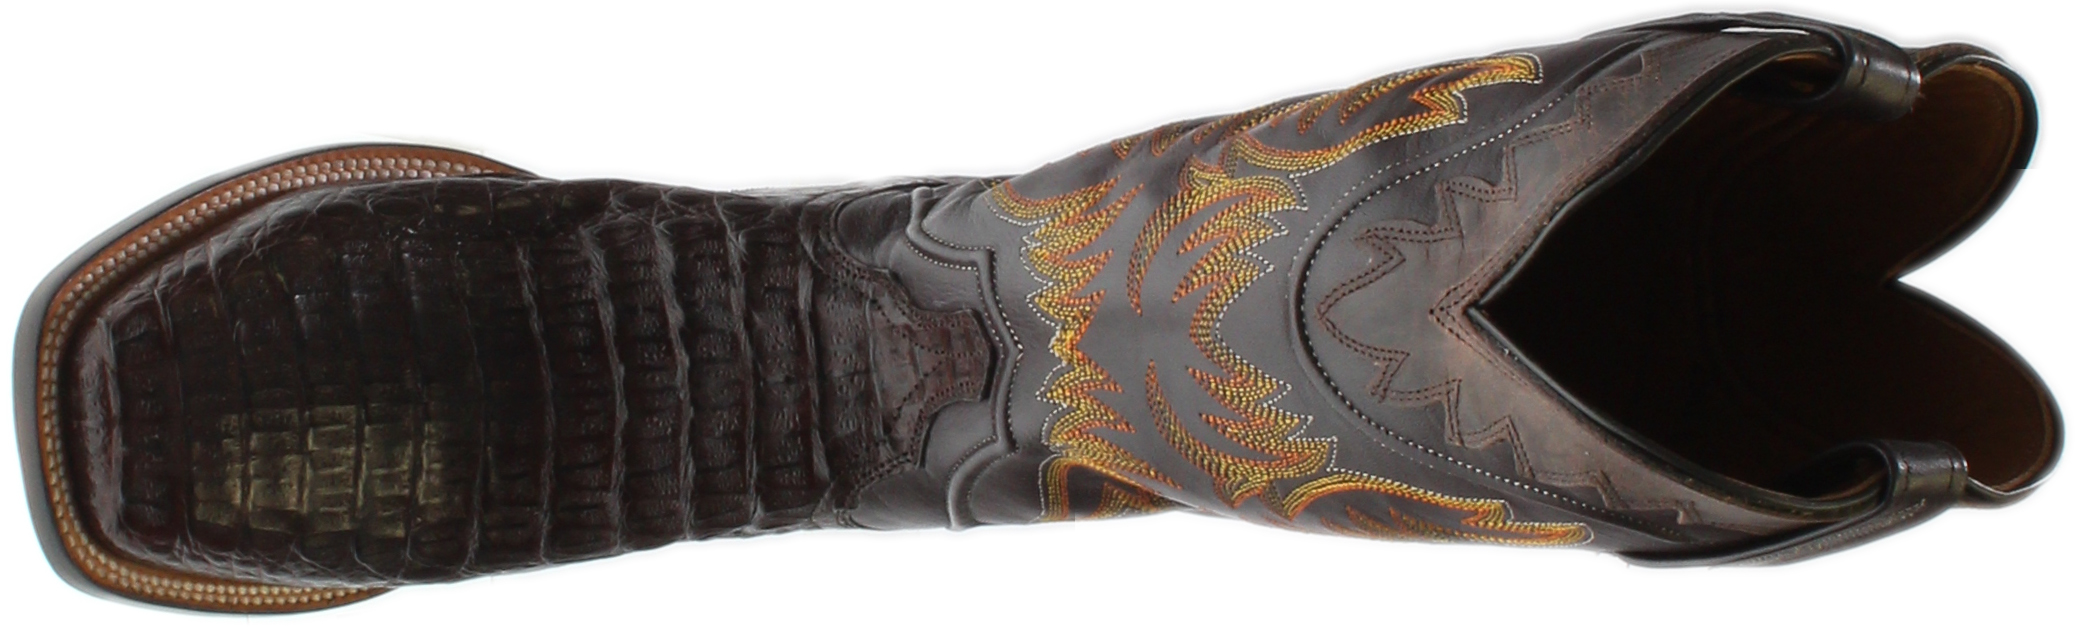 lucchese men's rhys hornback caiman